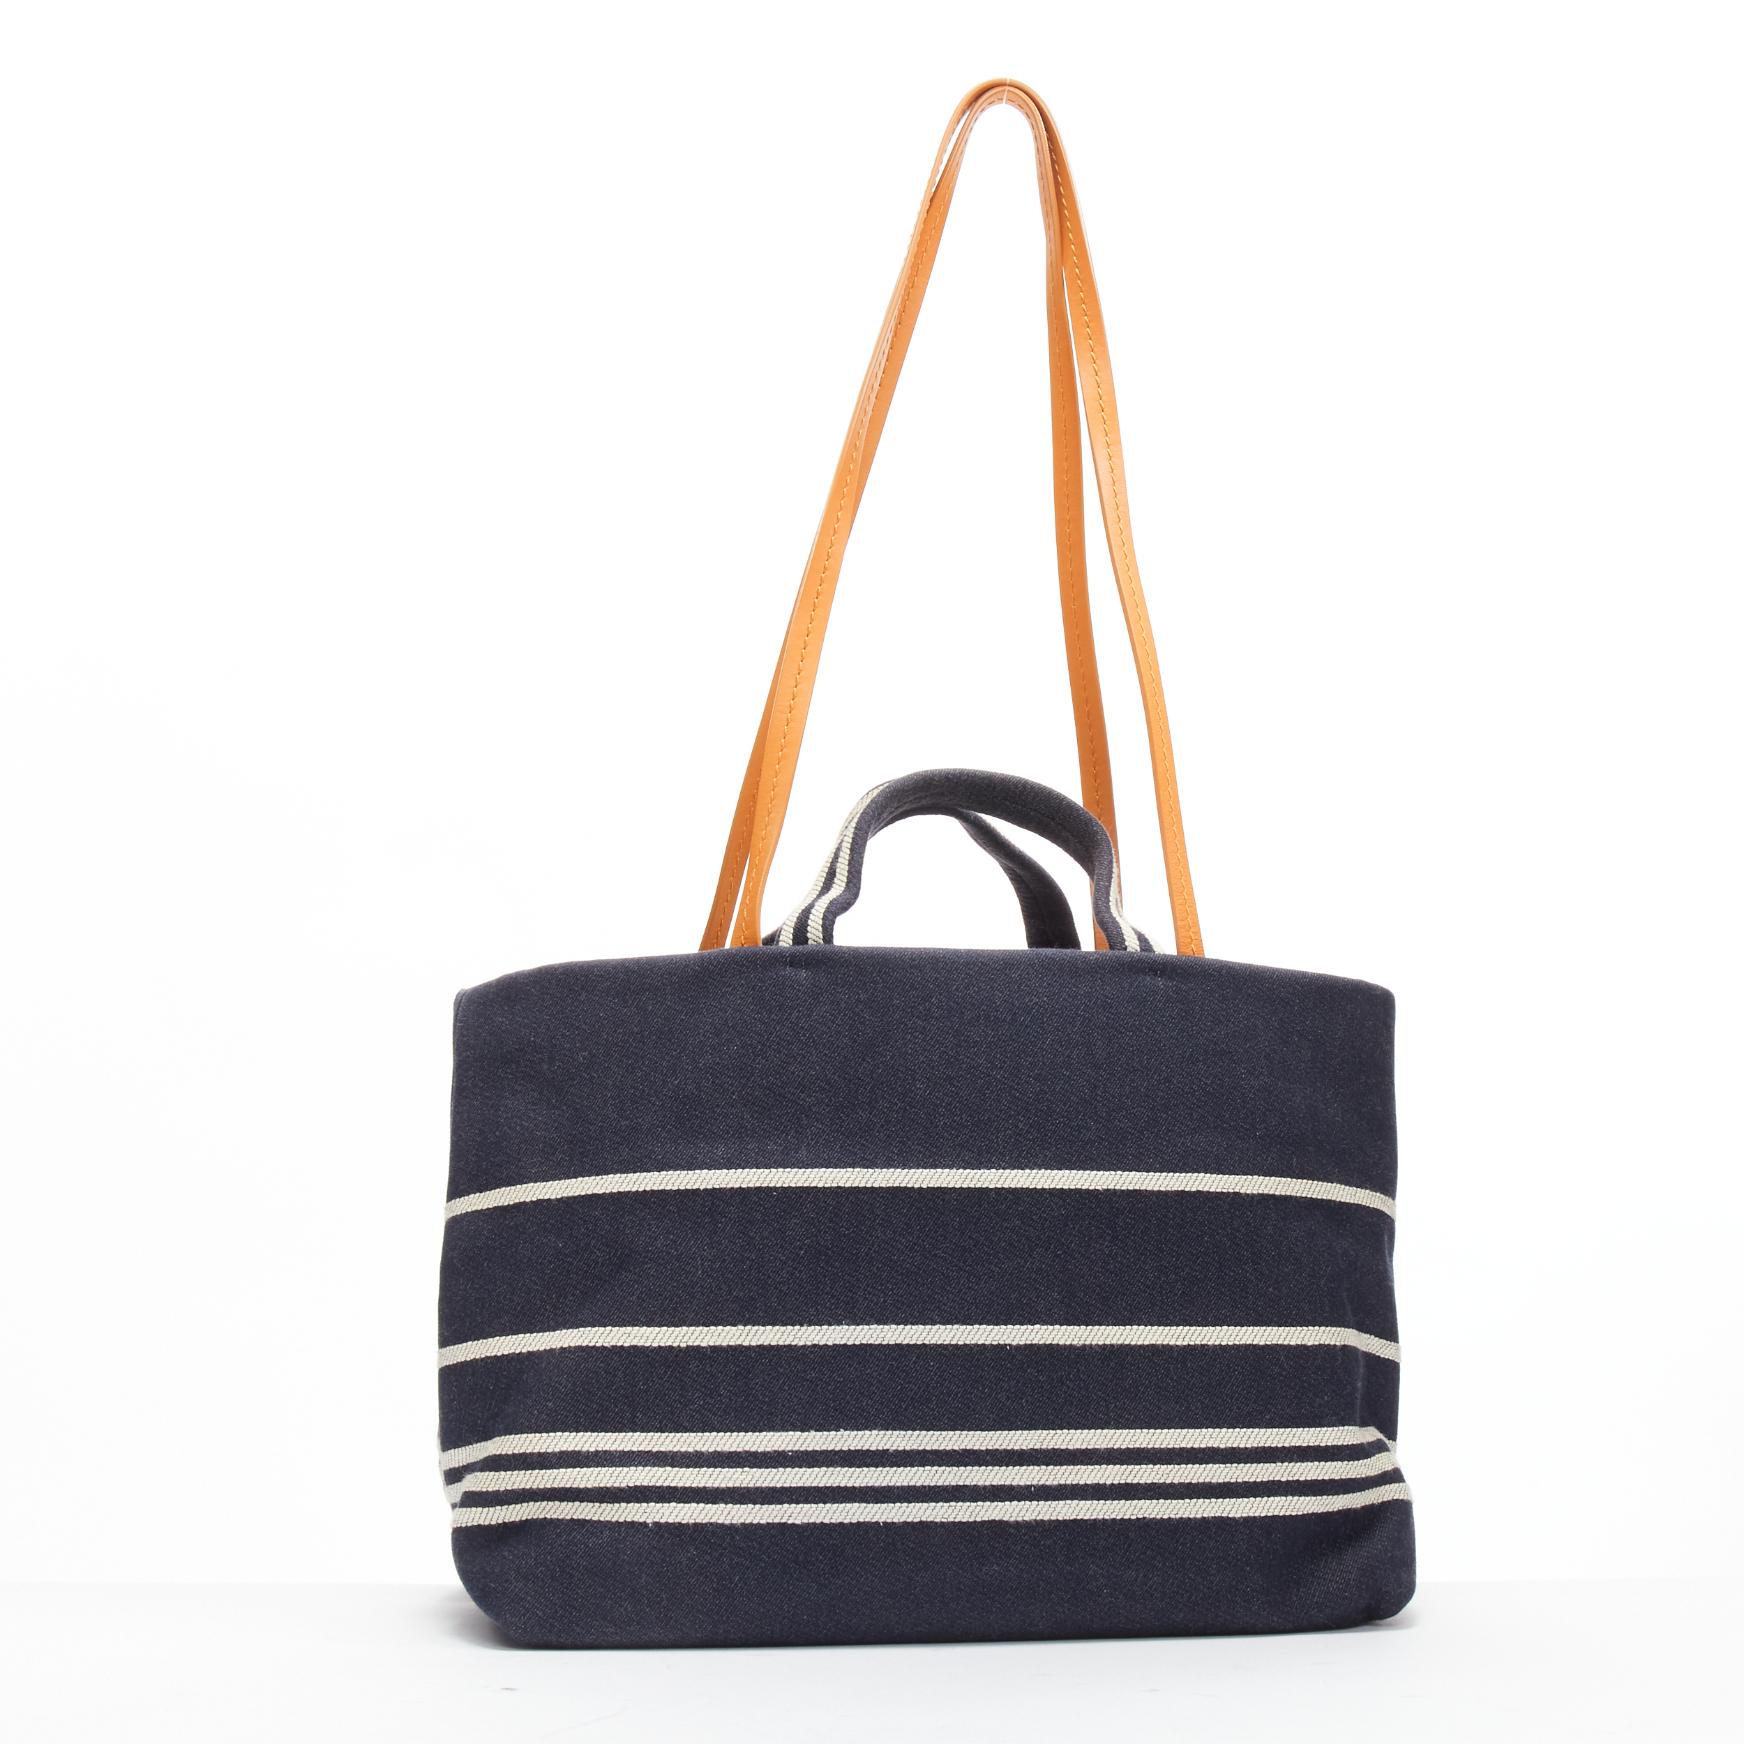 CHANEL Large Denim CC Shopping Tote logo stripes dark blue brown strap bag 1